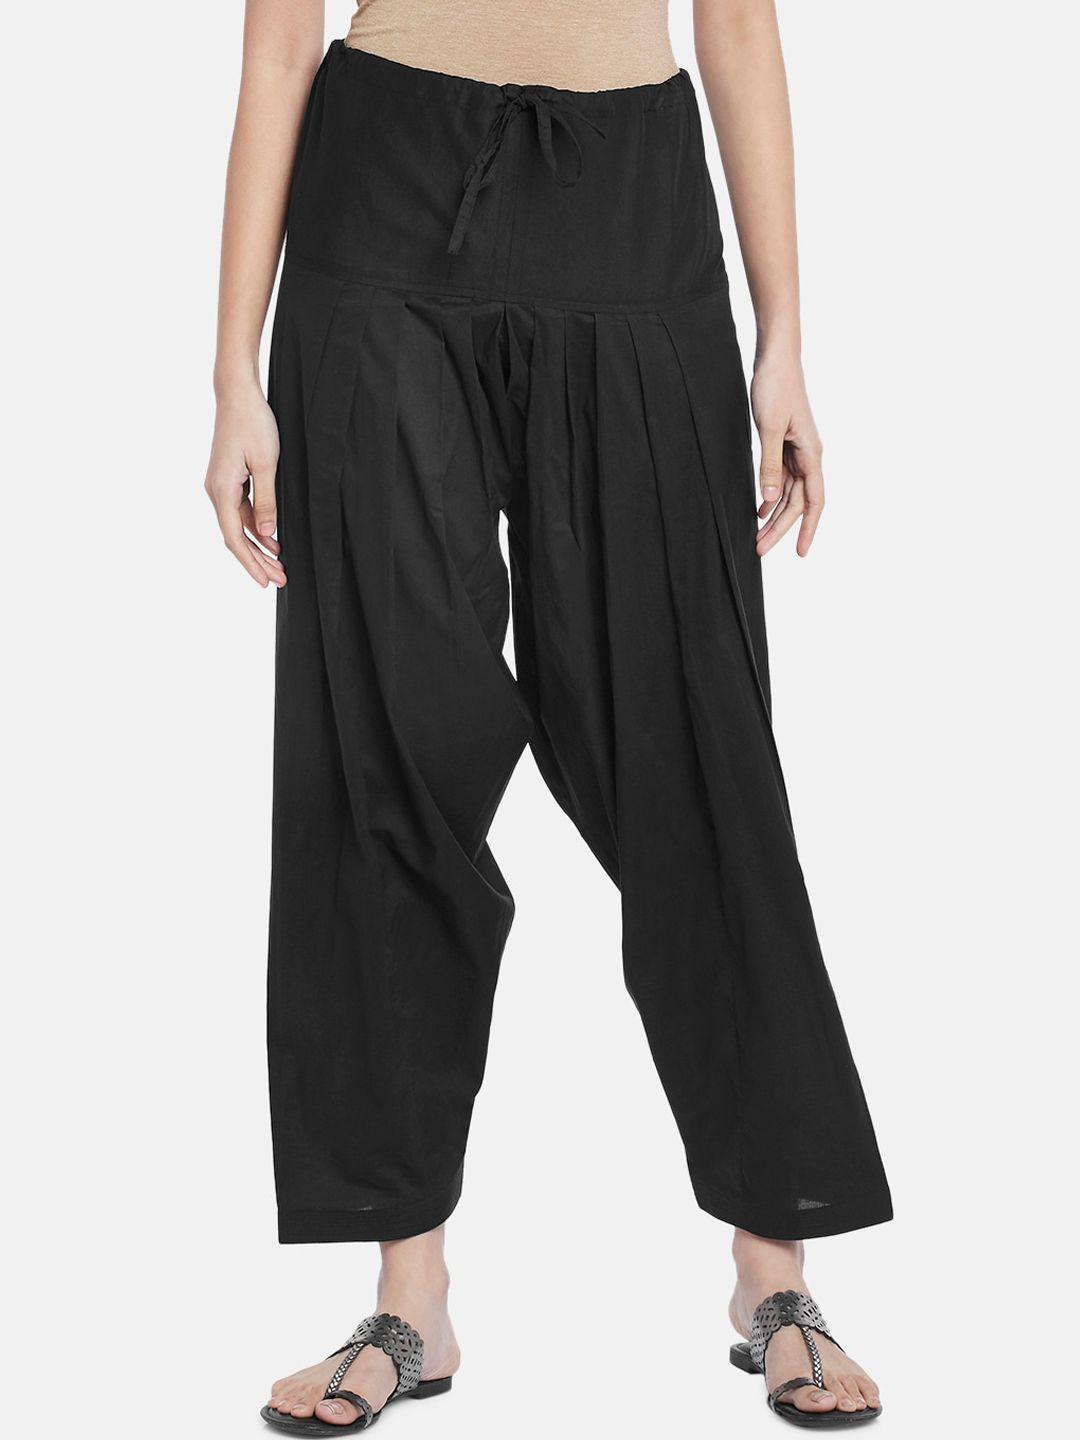 rangmanch by pantaloons women black solid pure cotton loose-fit salwar